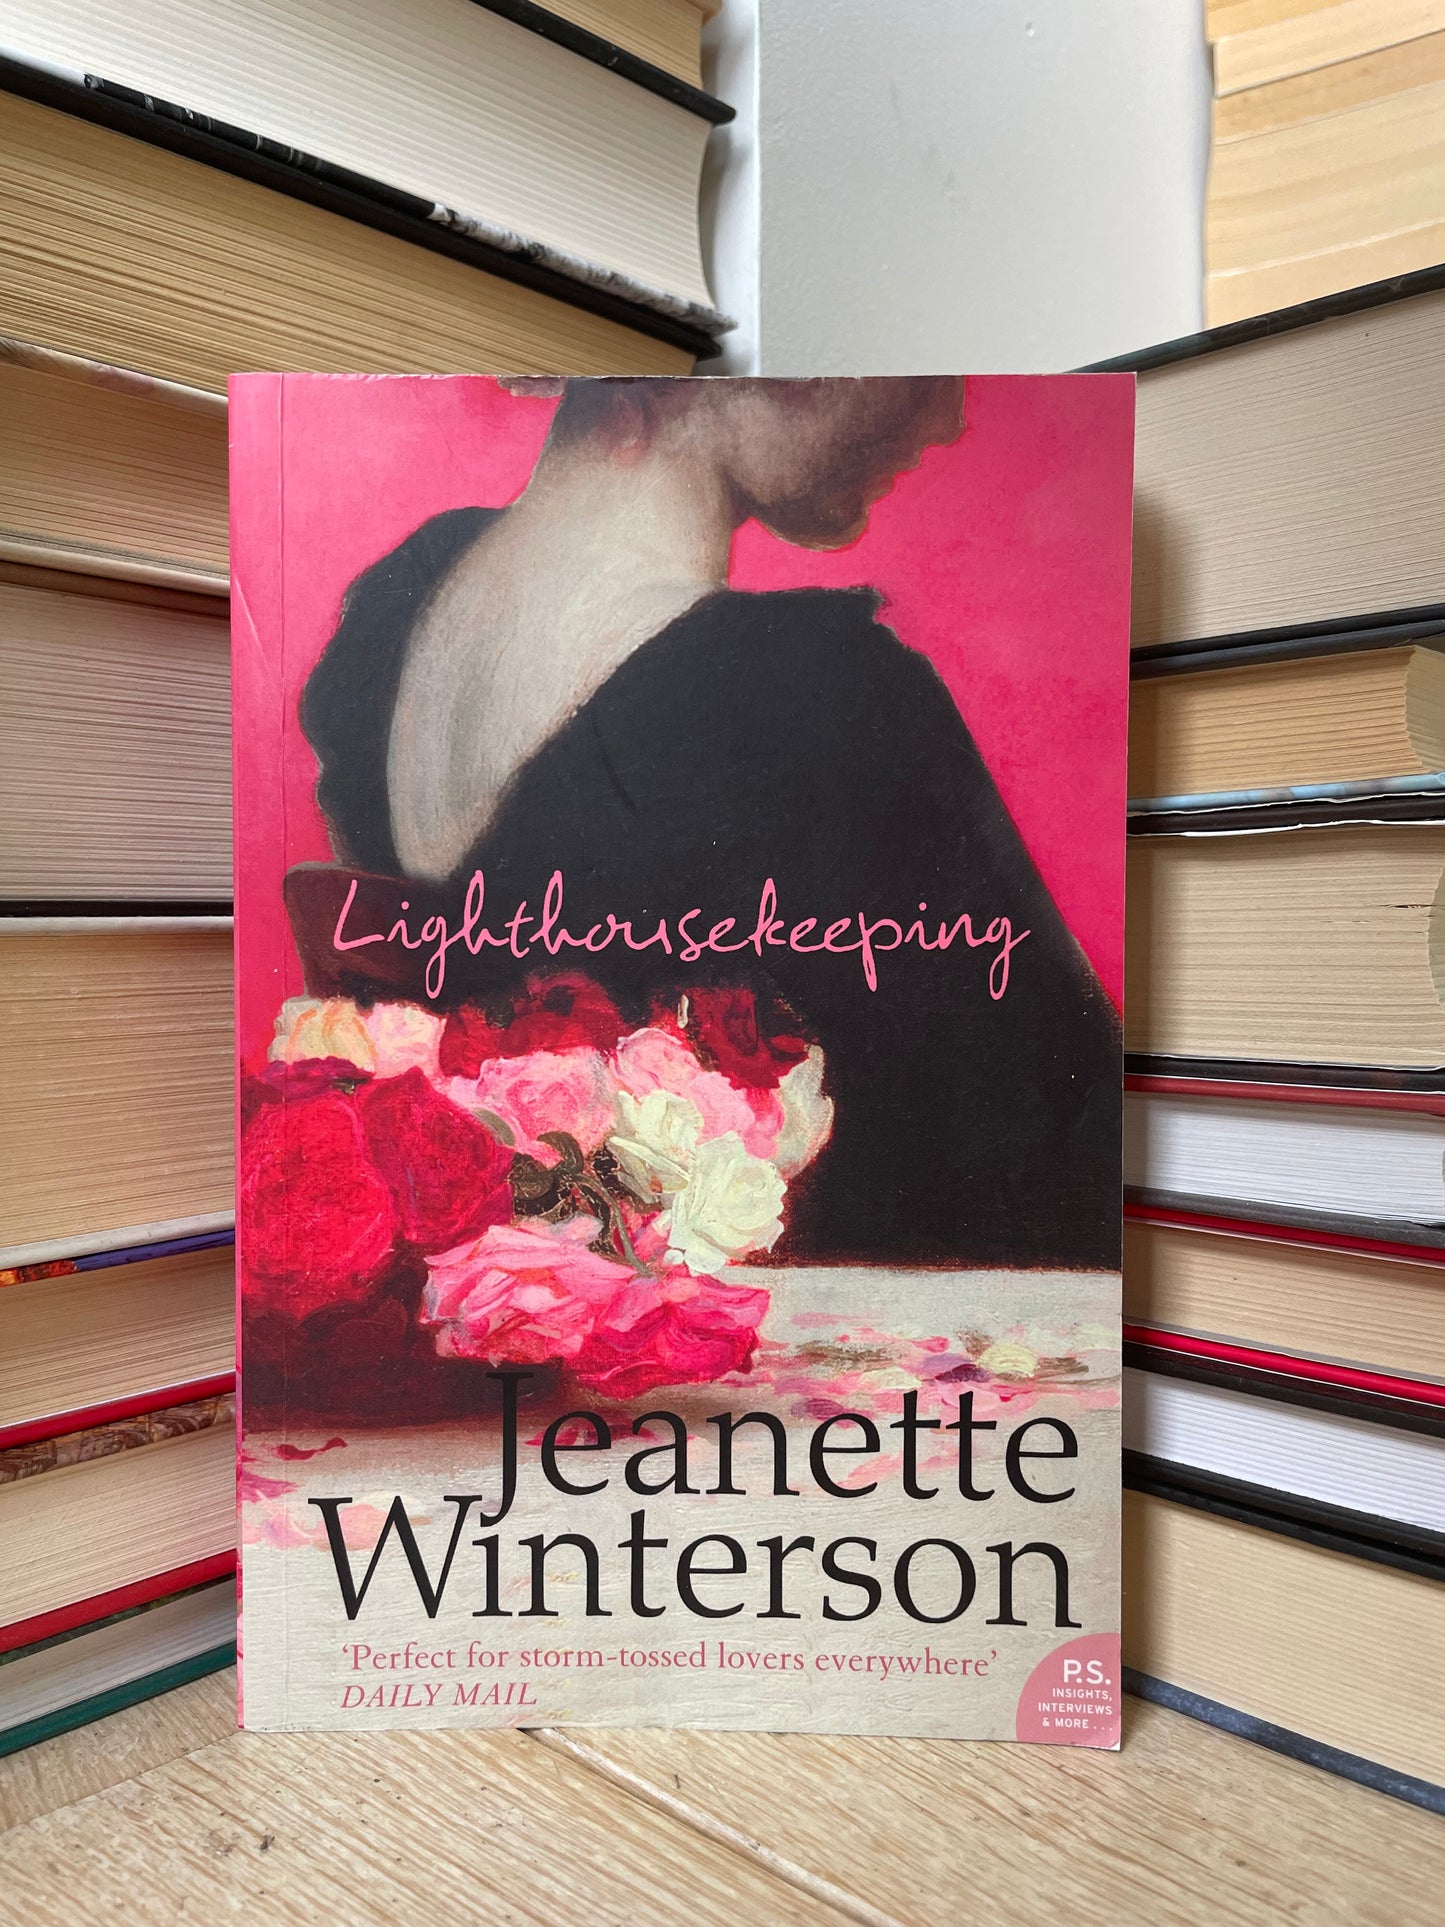 Jeanette Winterson - Lighthousekeeping